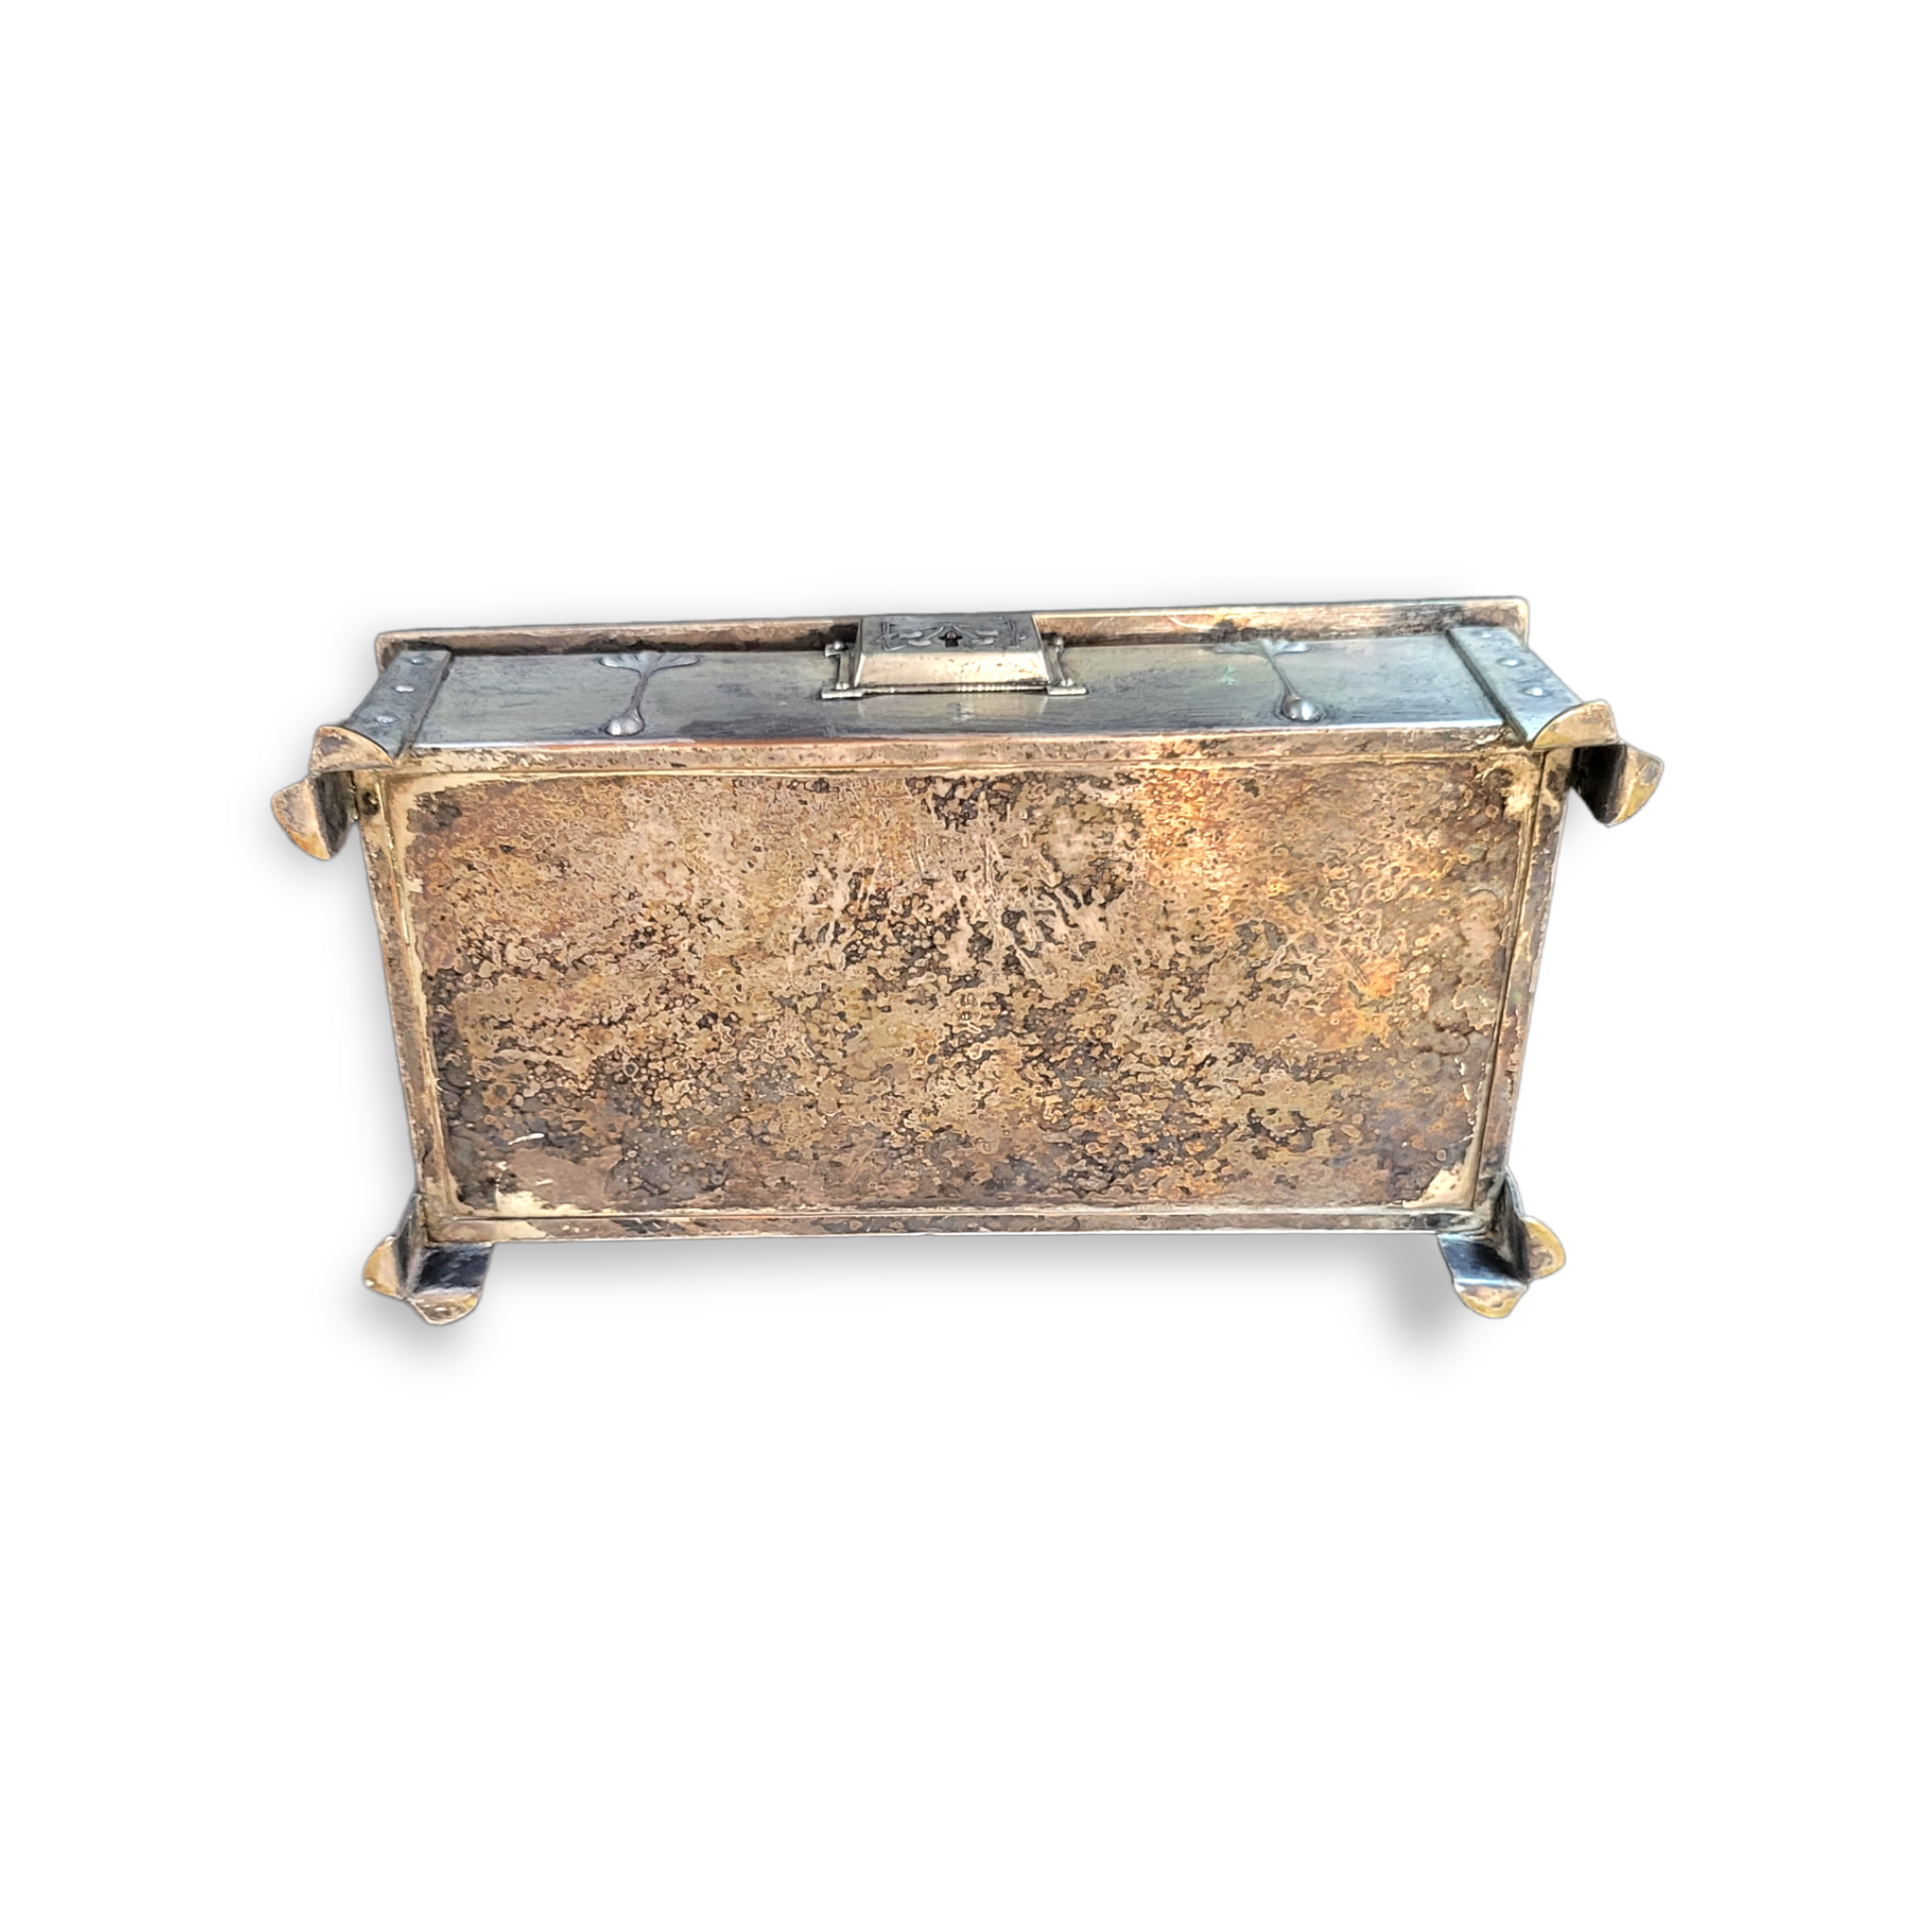 A. E. Jones & Co. Birmingham, England Silver over Copper Art Nouveau Trinket Box